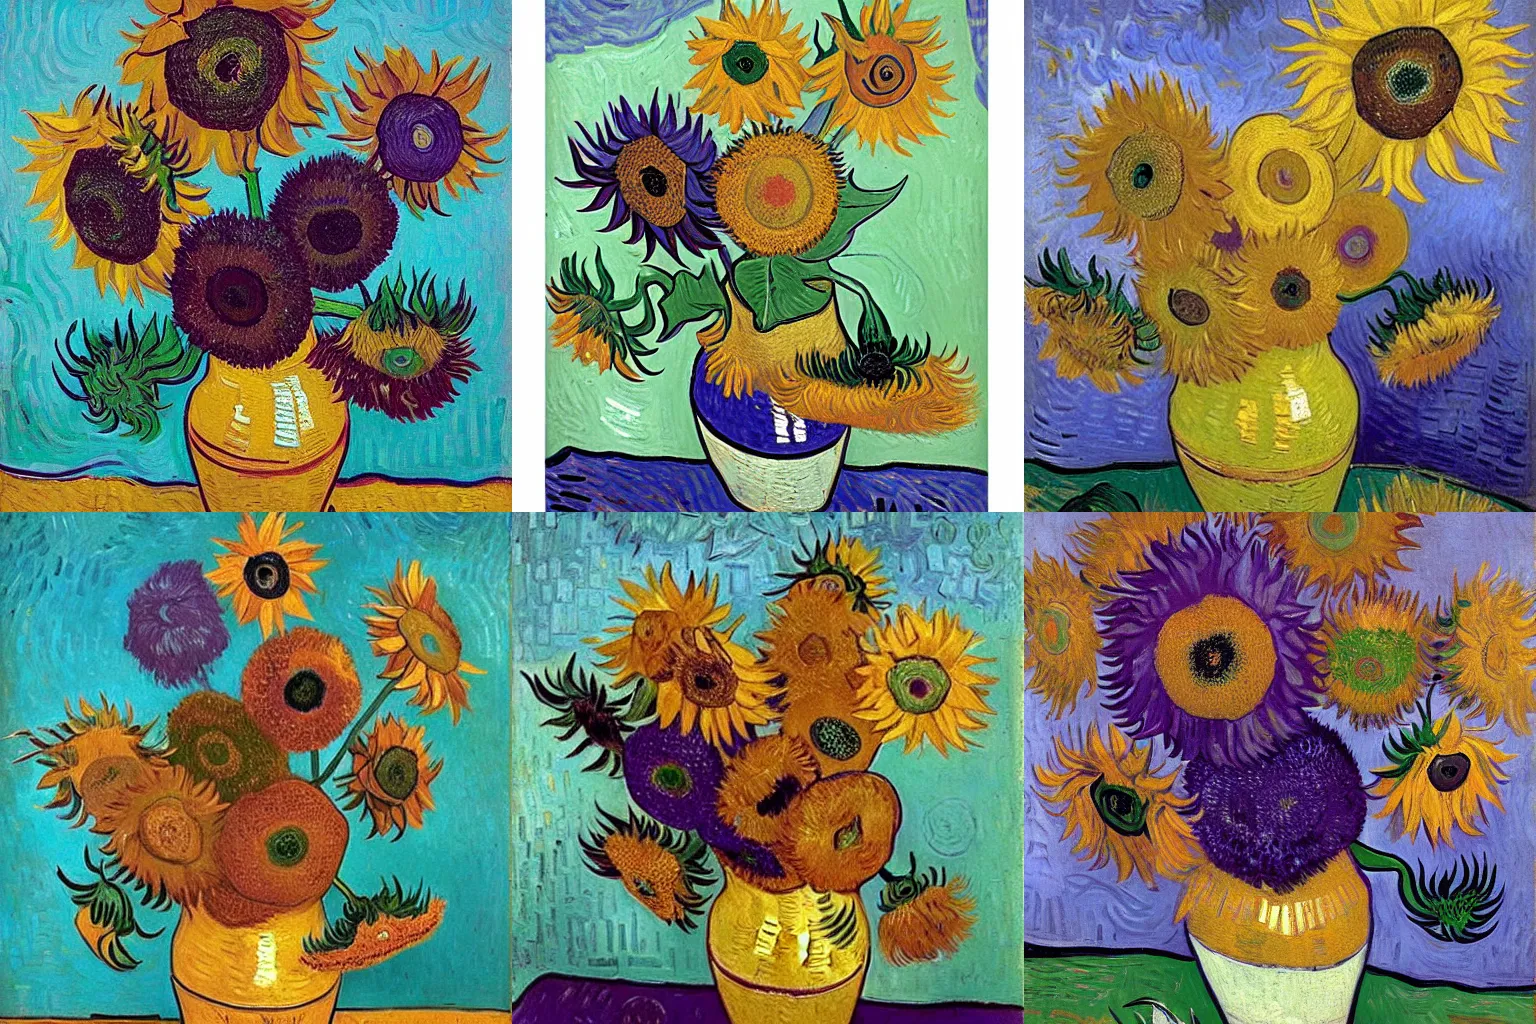 Prompt: purple sunflowers, by van gogh